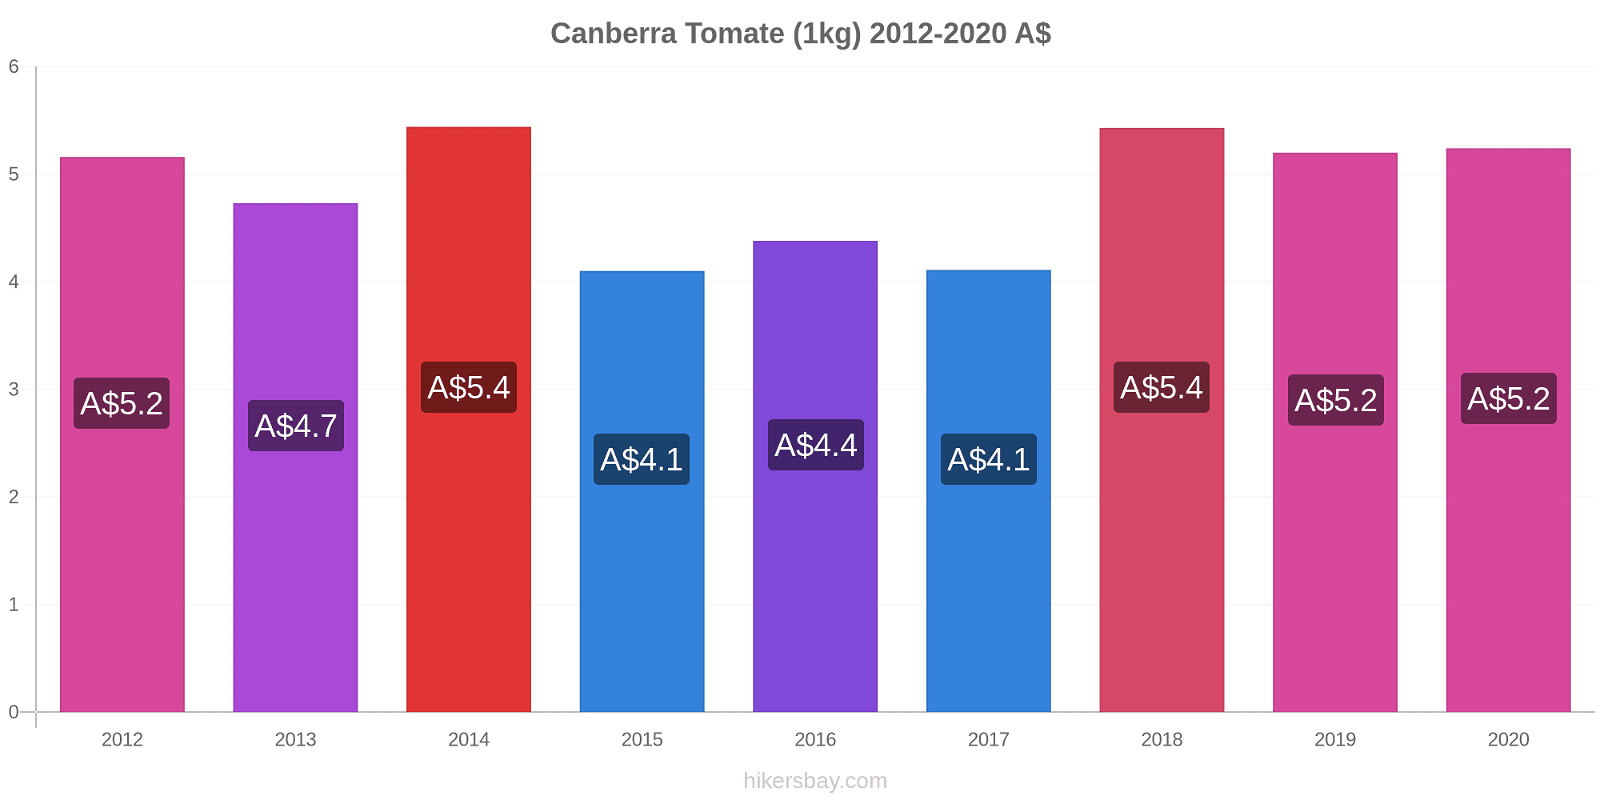 Canberra cambios de precios Tomate (1kg) hikersbay.com